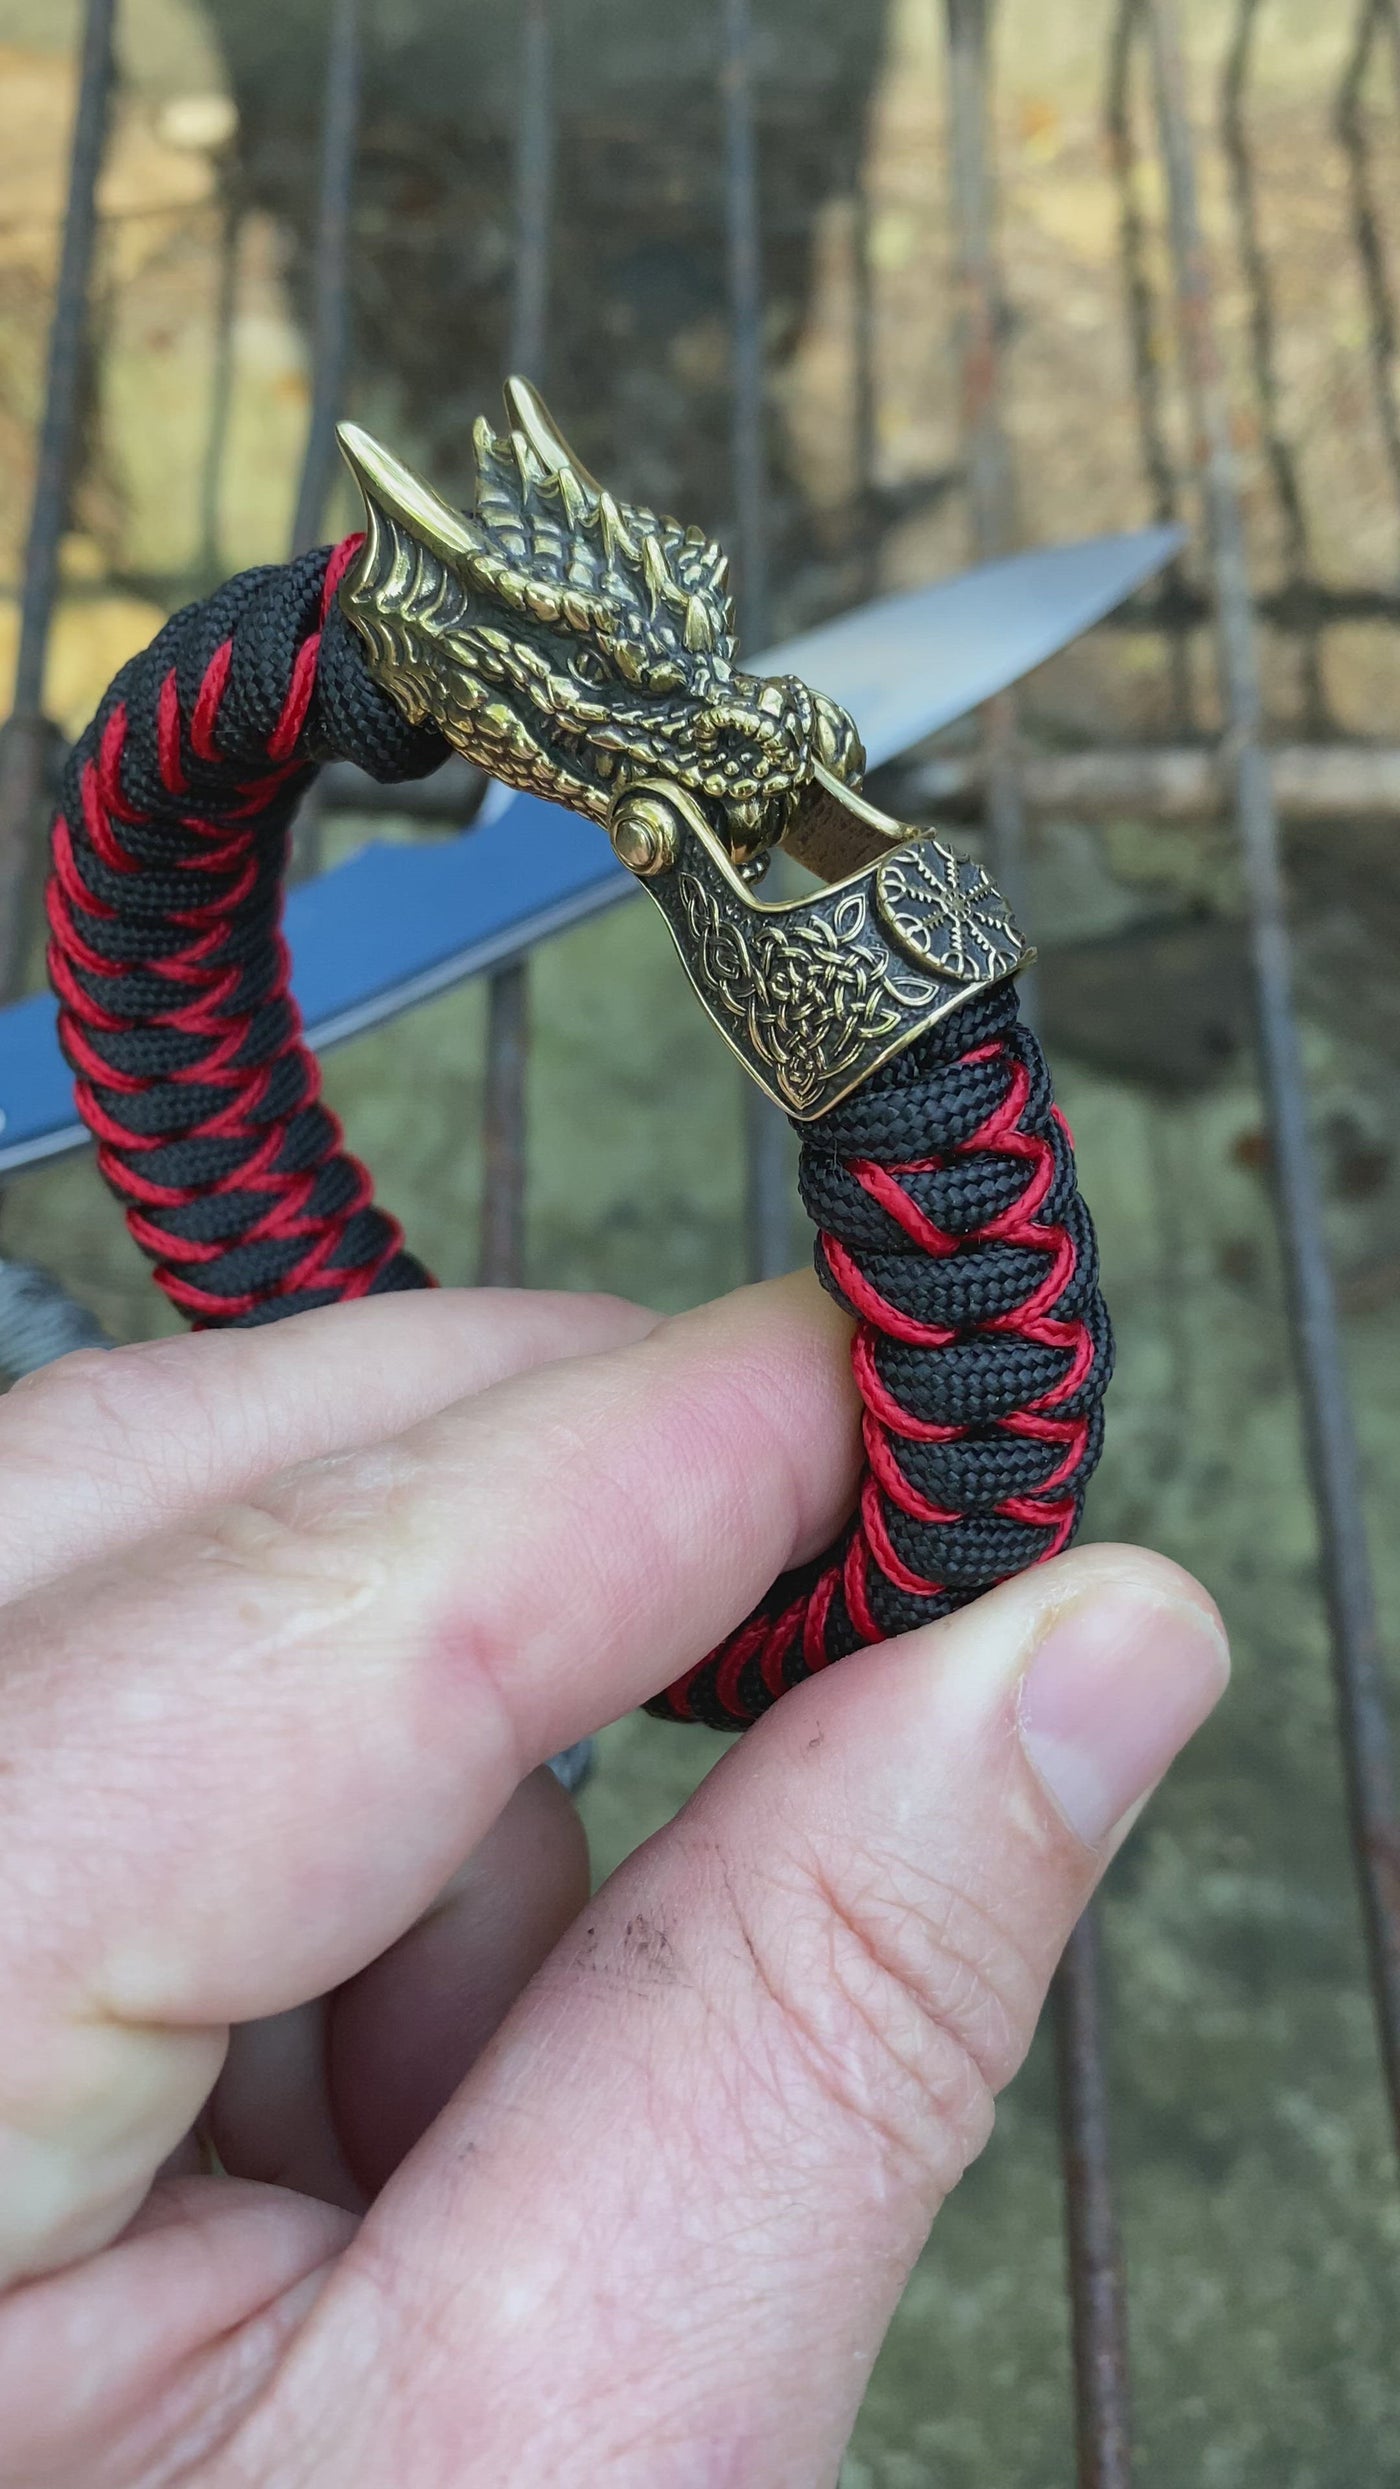 The Great Fafnir dragon bracelet